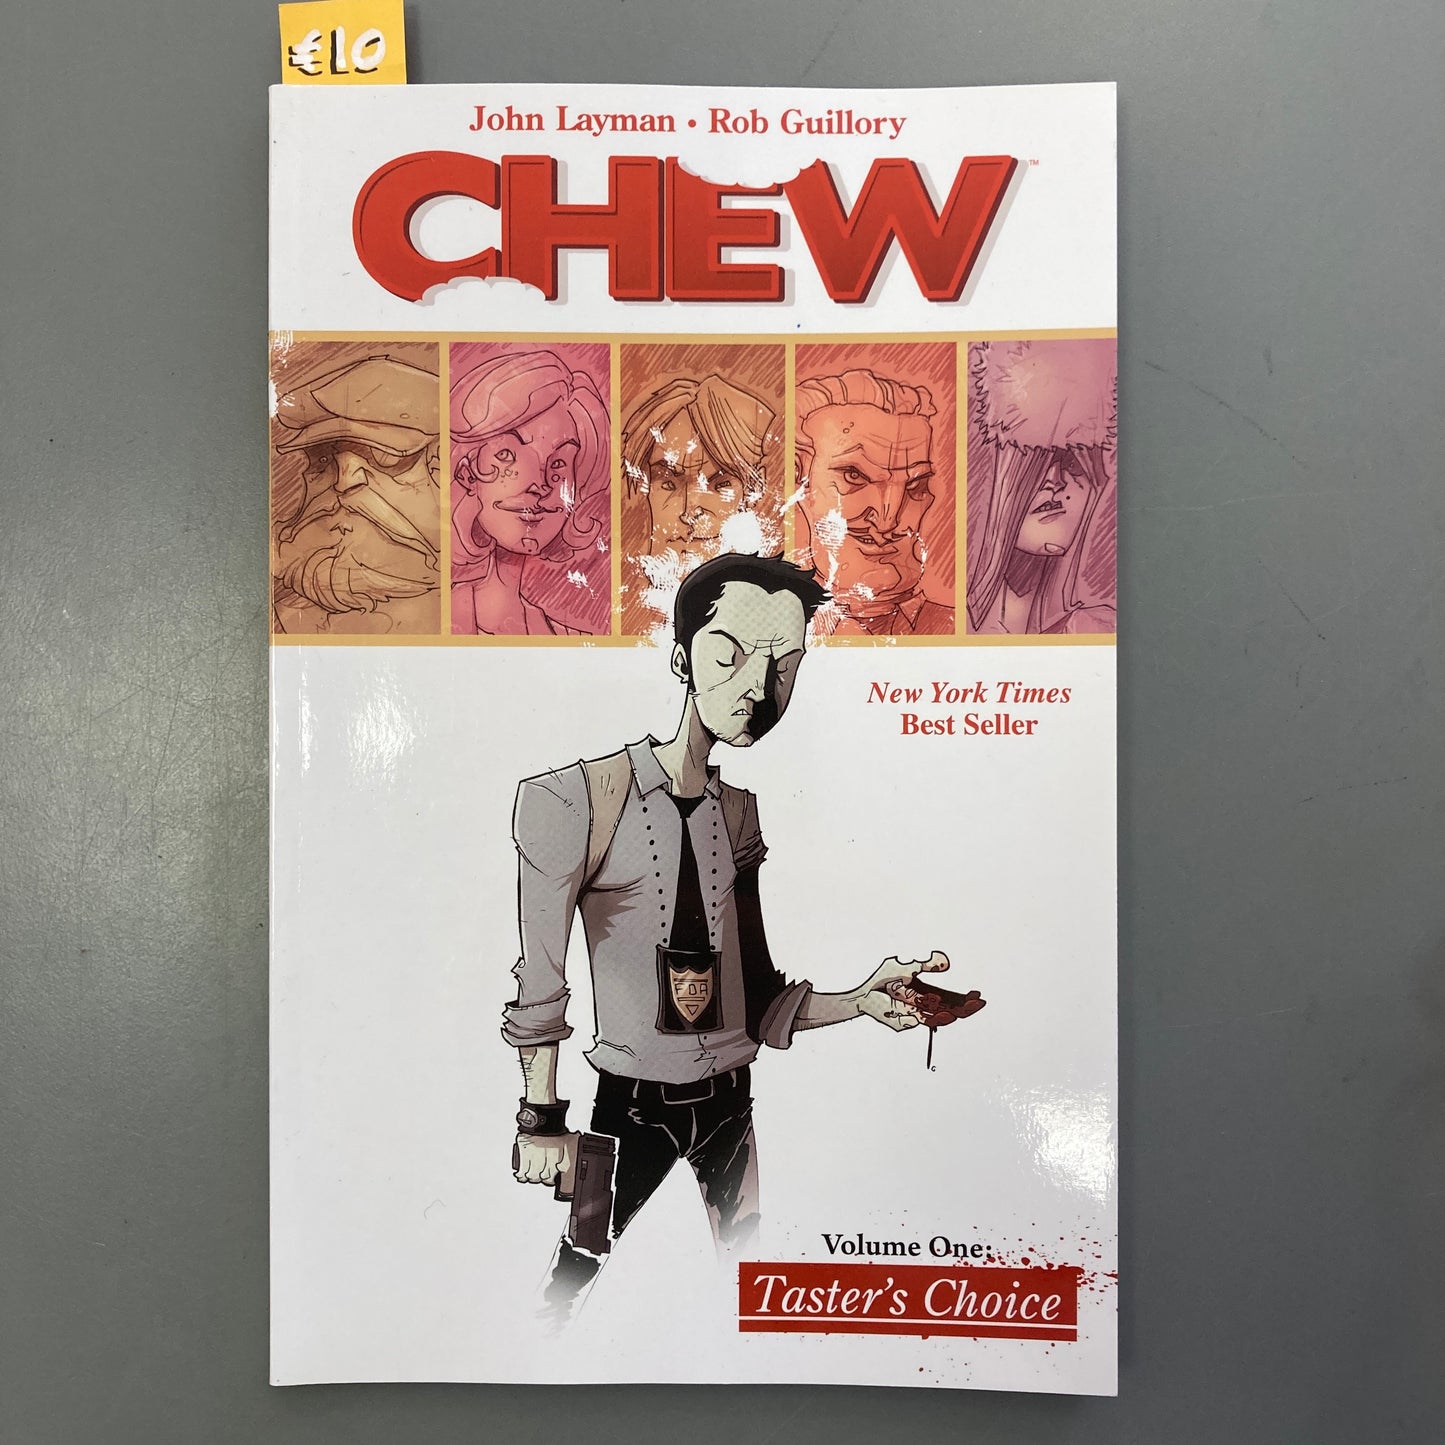 Chew, Volume One: Taster's Choice